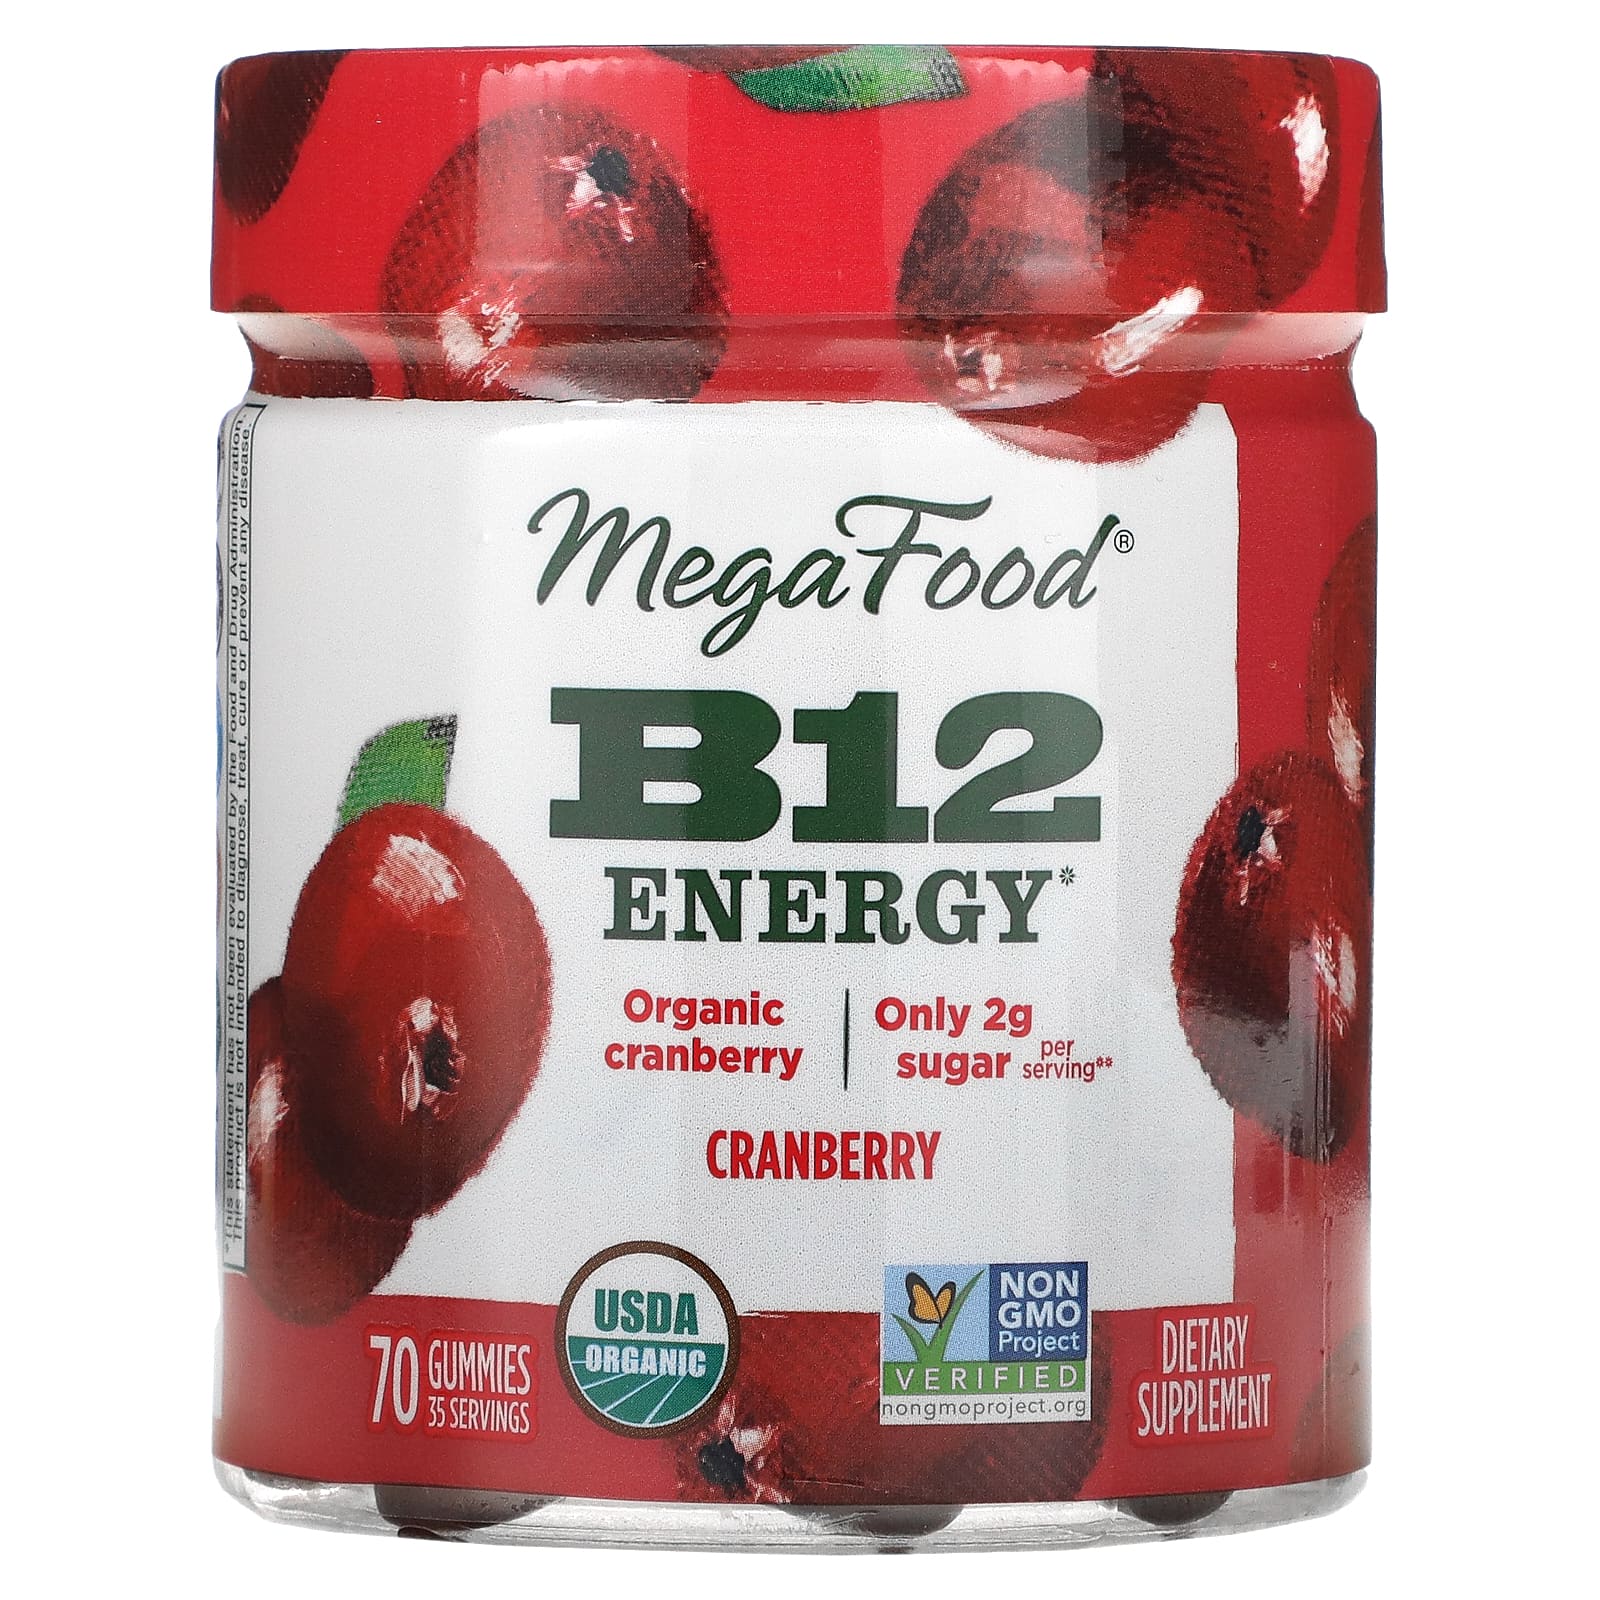 MegaFood B12 Energy Cranberry 70 Gummies витамин b12 megafood energy имбирь 70 жевательных таблеток